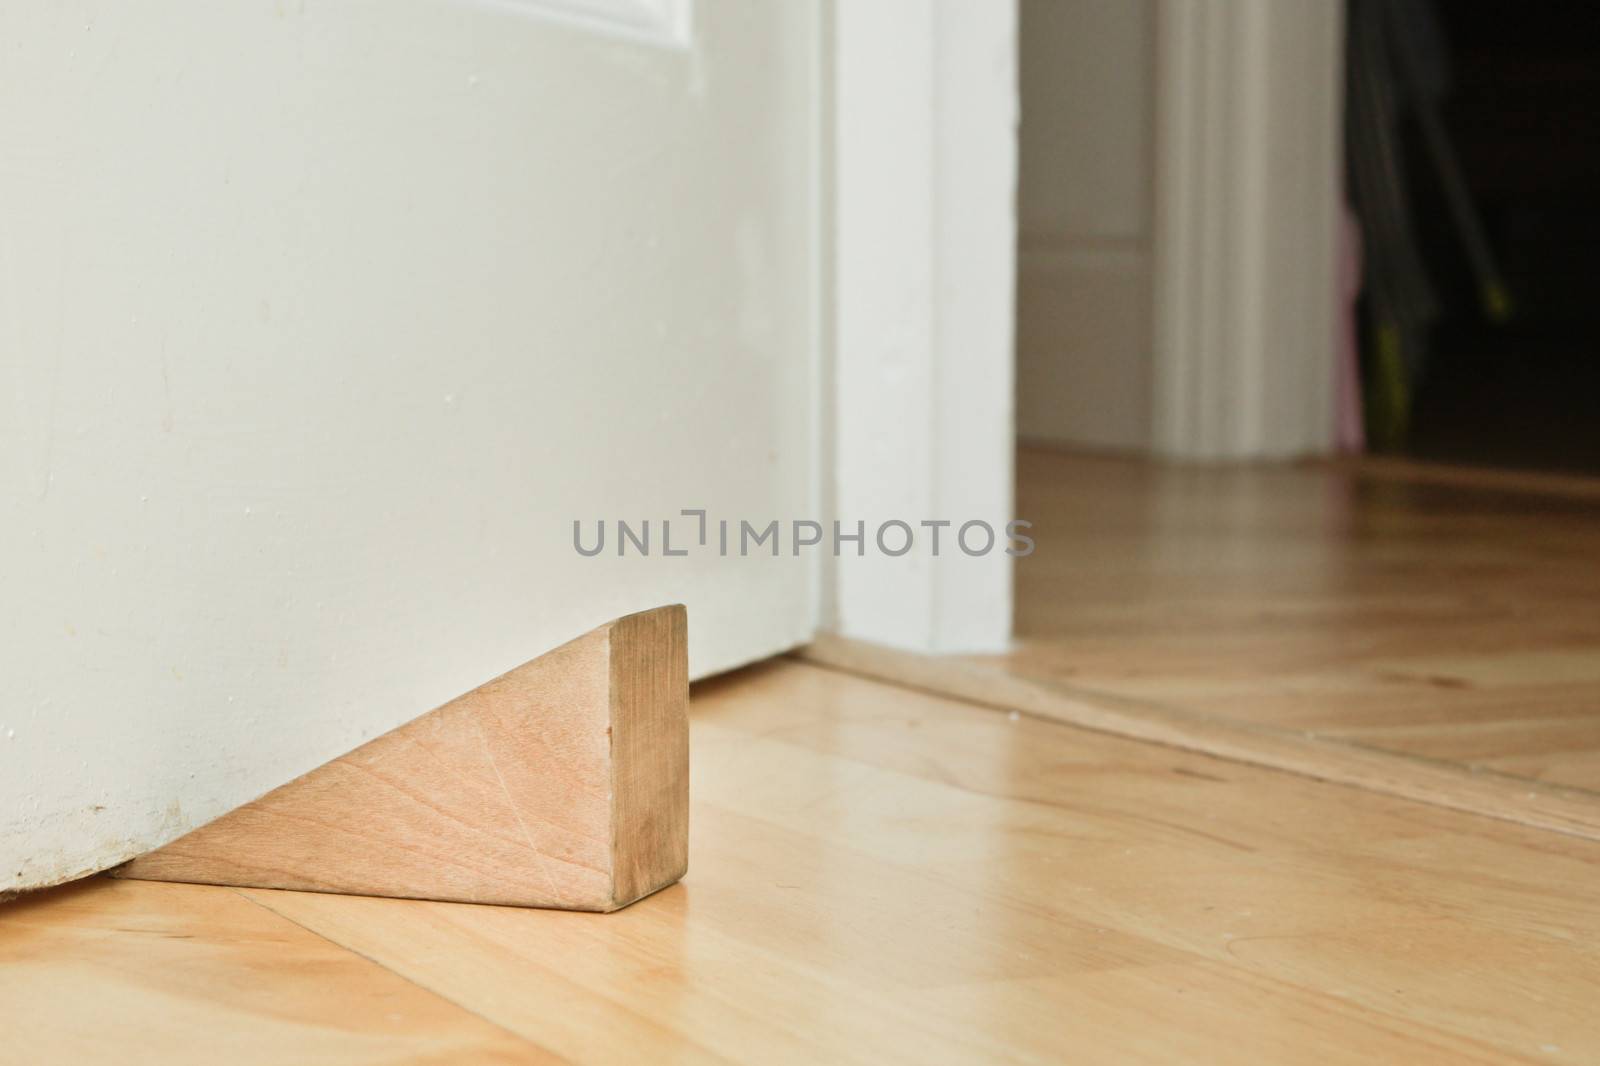 A wooden door stopper on a laminate floor